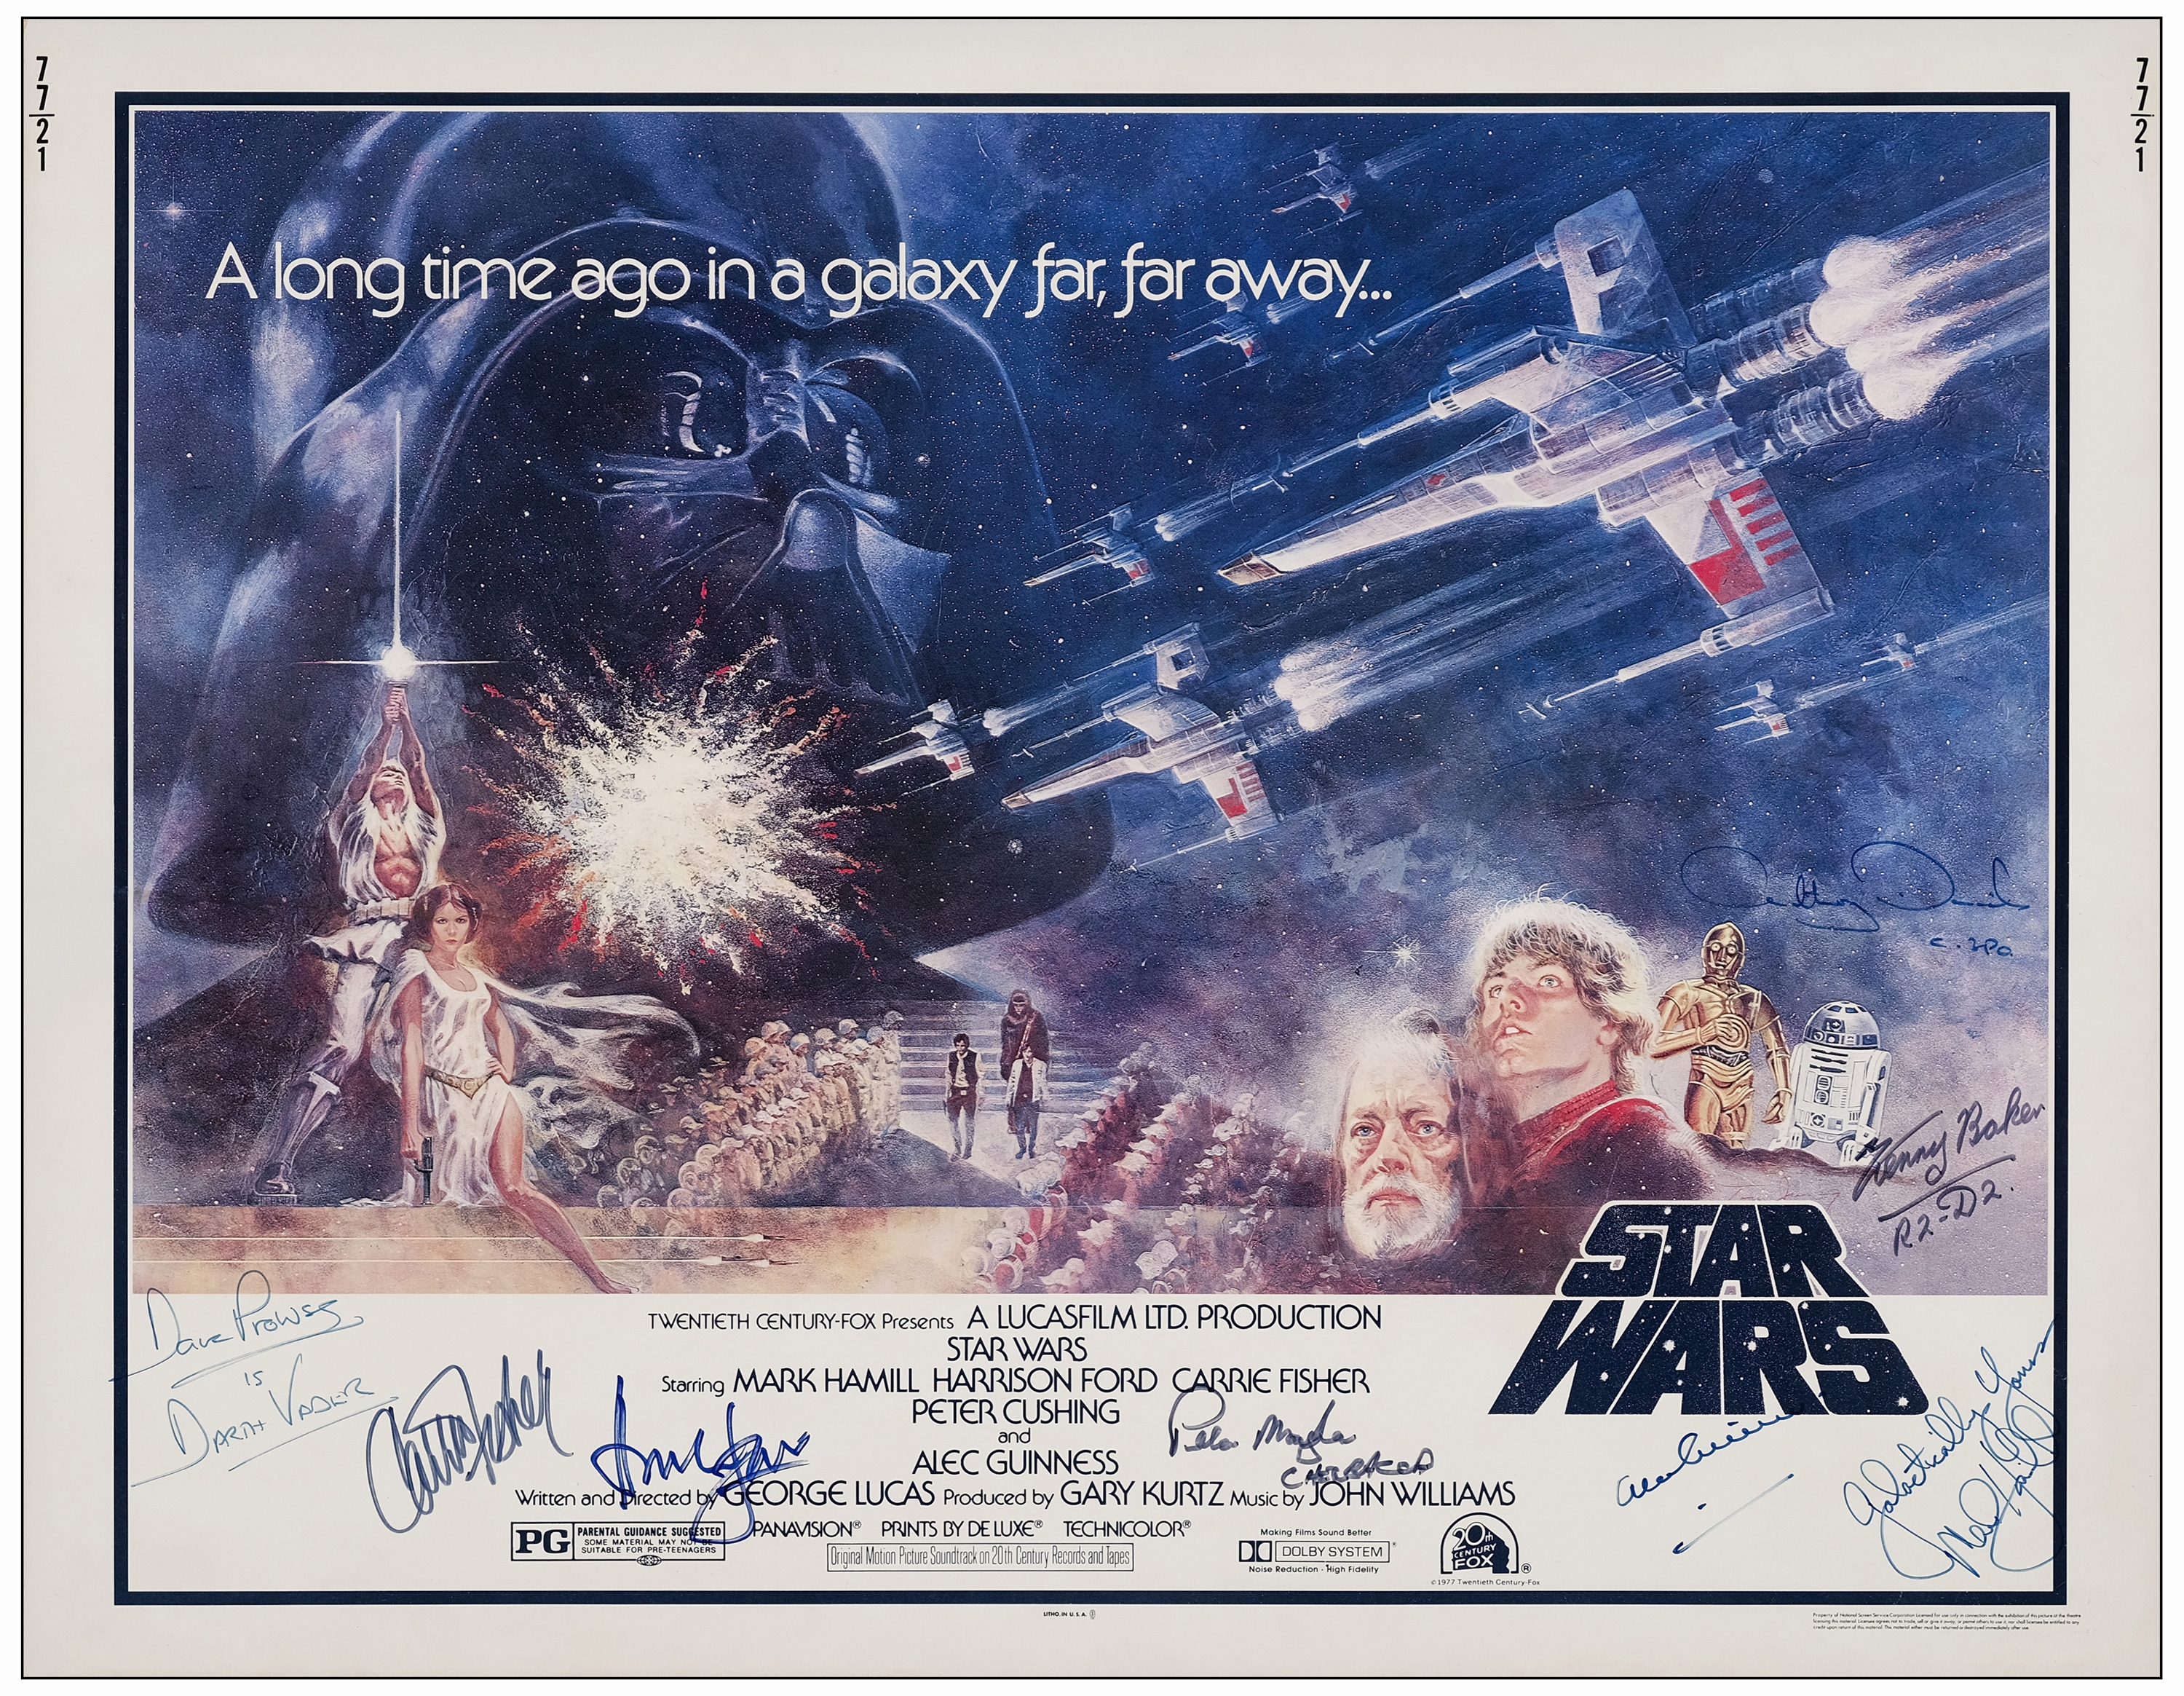 STAR WARS: A NEW HOPE - Half Sheet (22" x 28") (JSA COA)Autographed by Alec Guinness, Mark Hamill, C